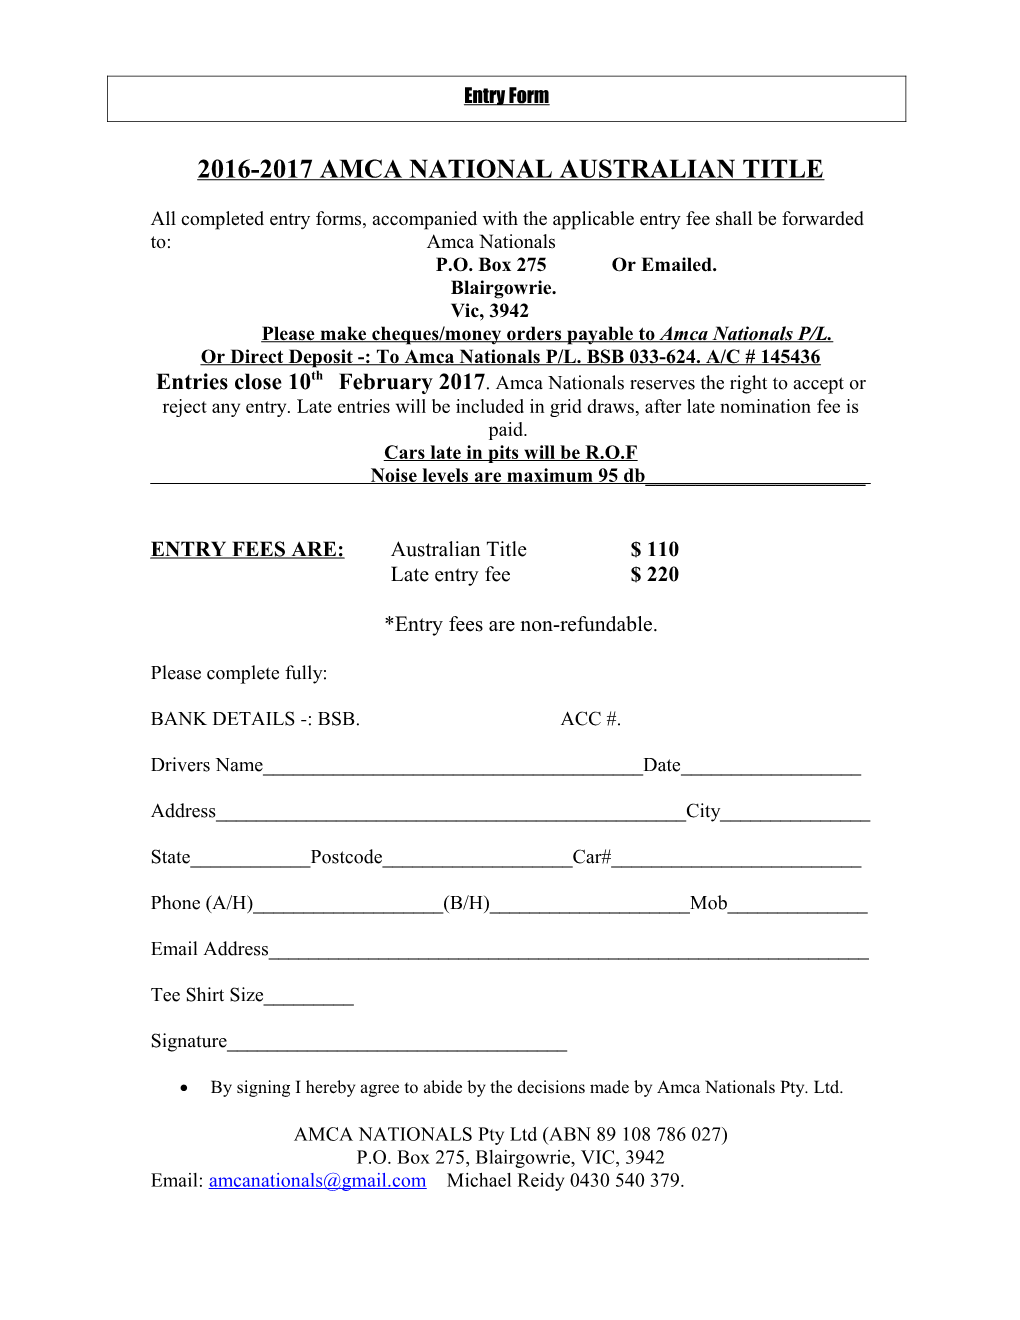 2008-2009 Amca National Australian Title